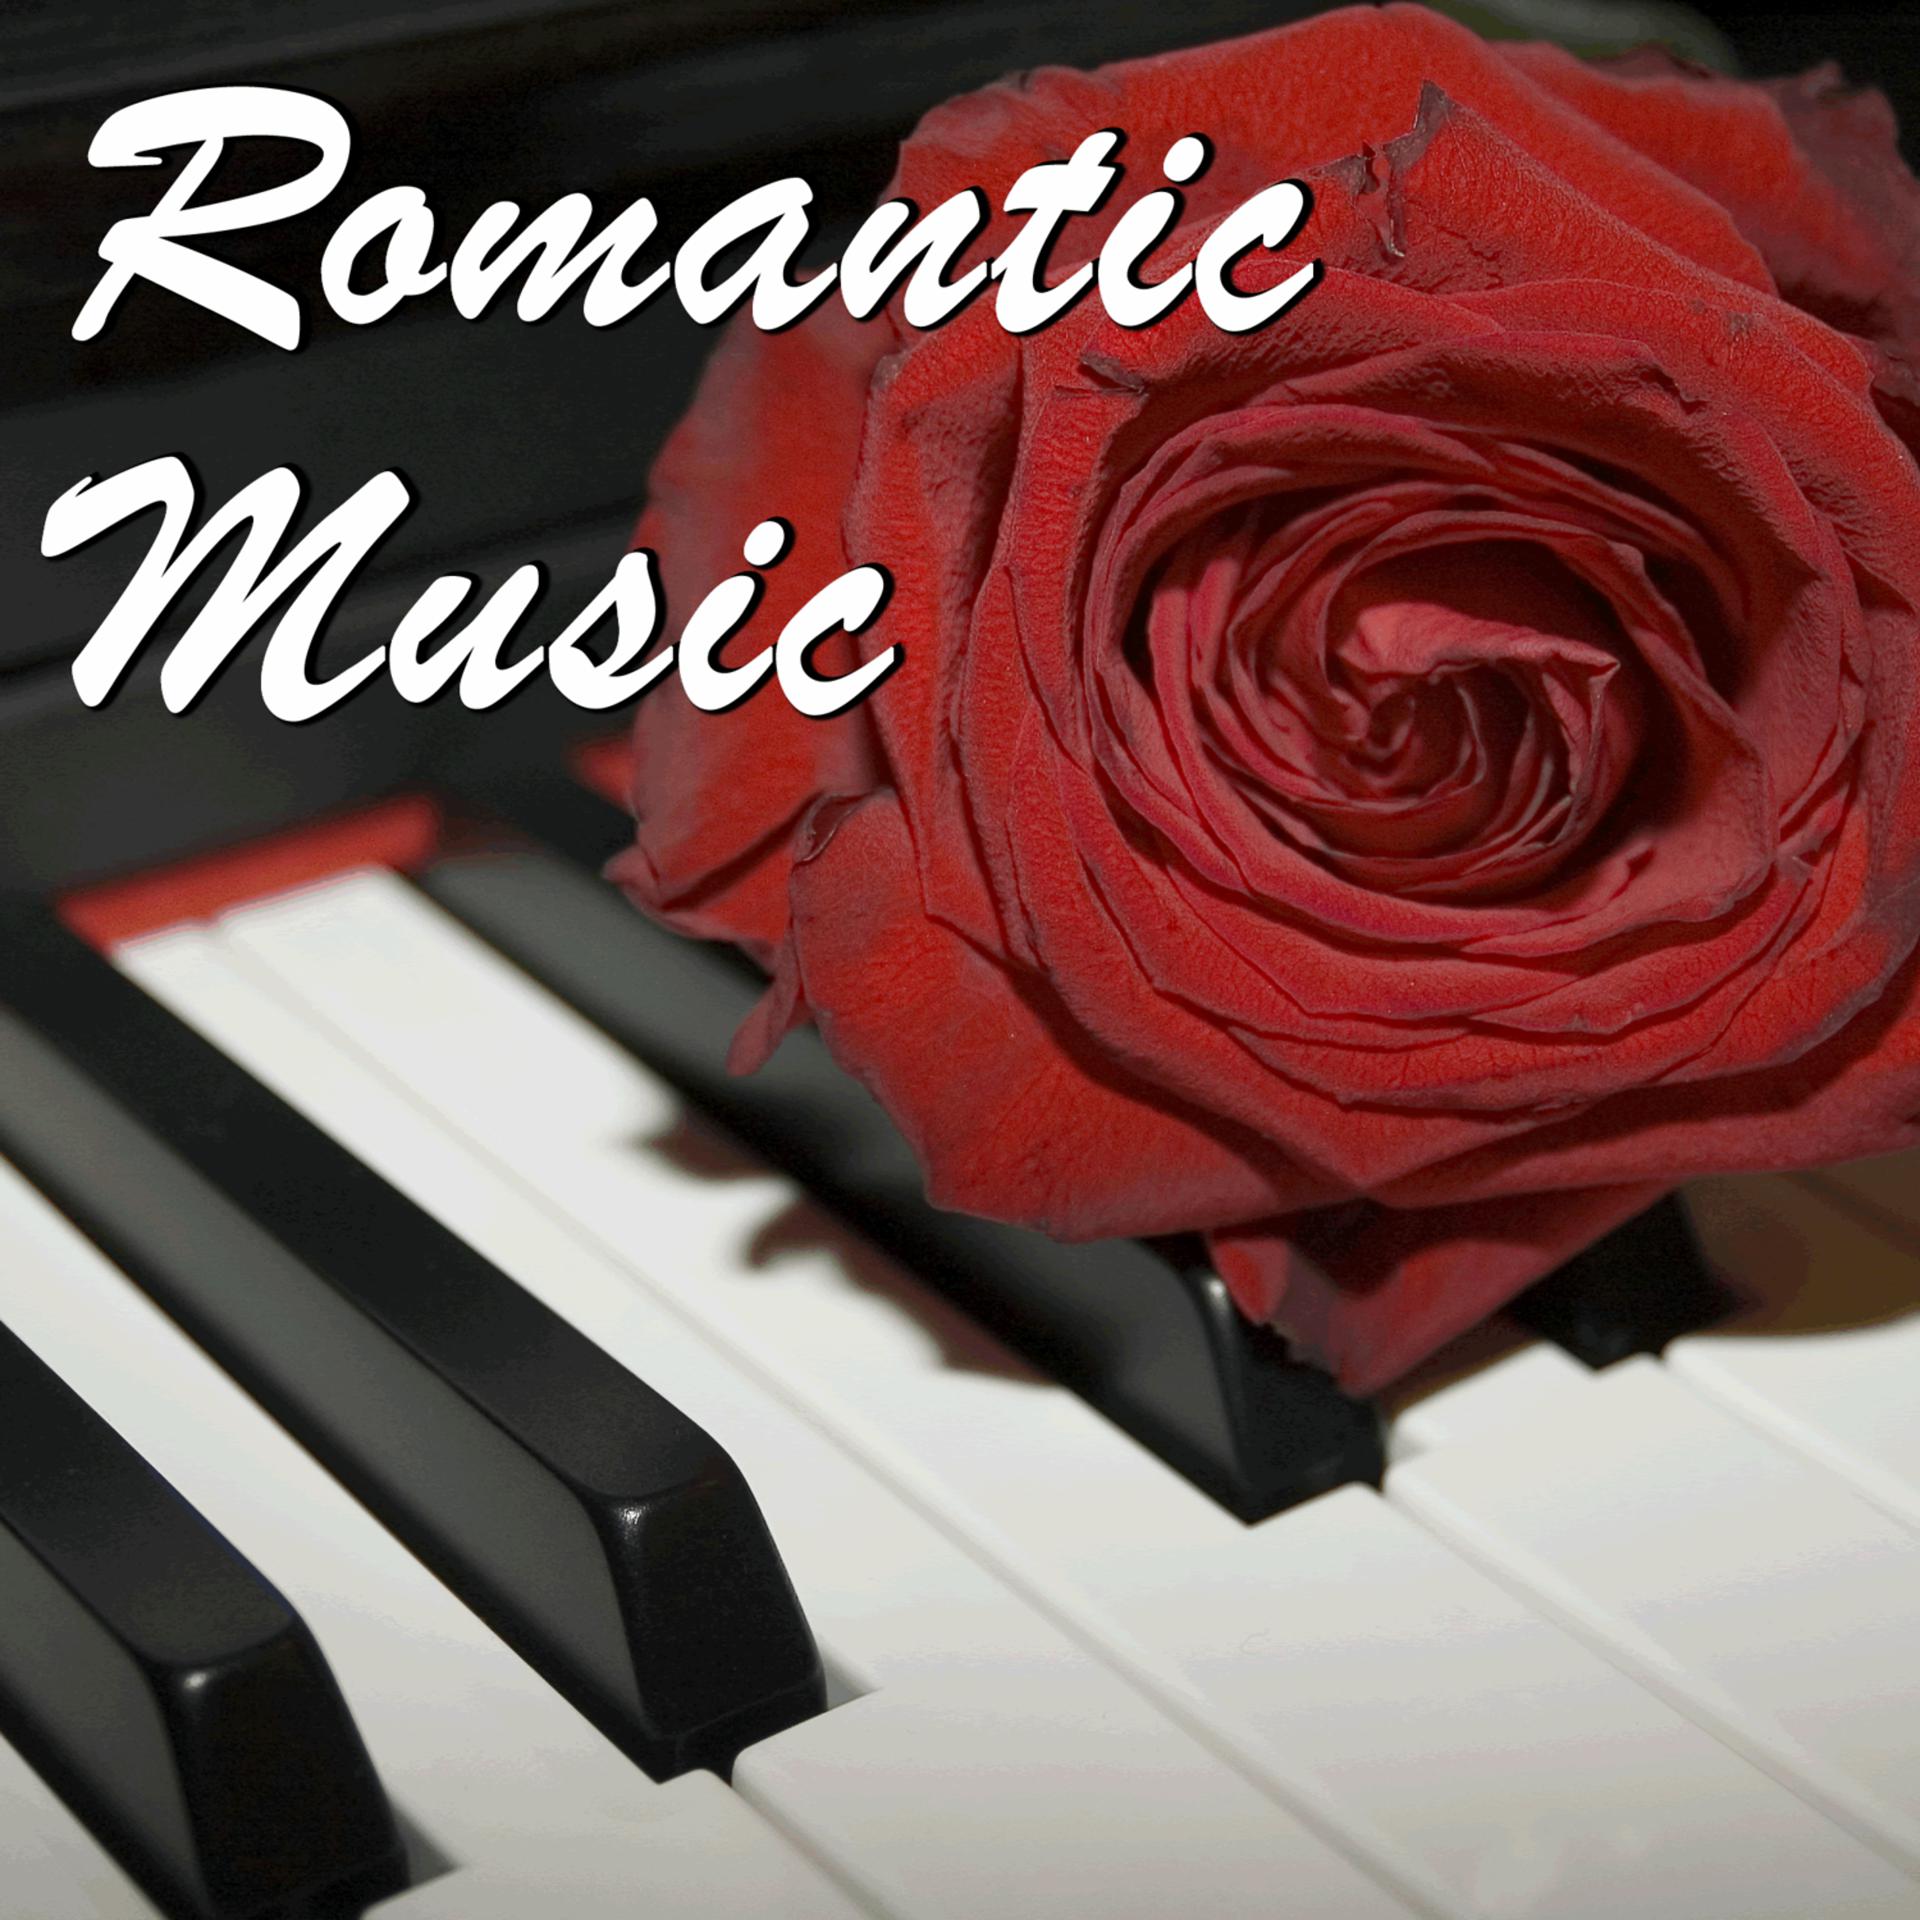 Романтик музыка онлайне